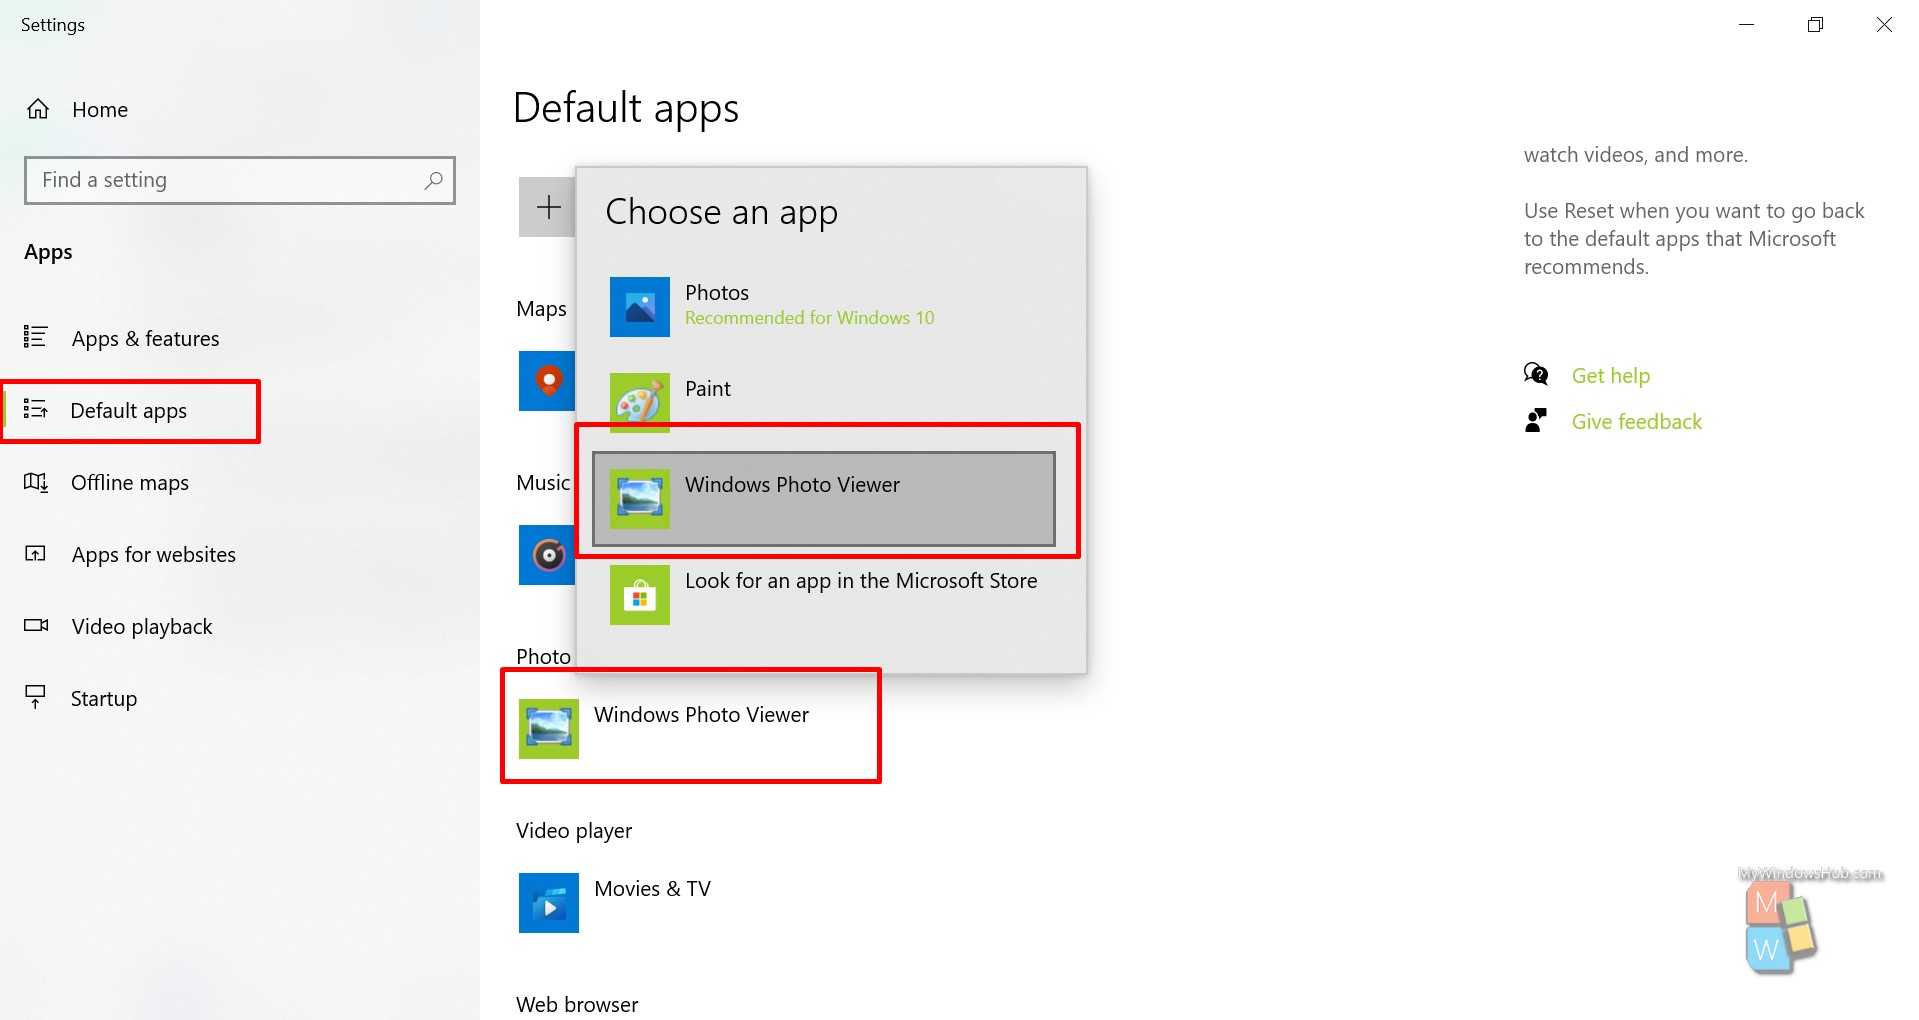 How To Restore Windows Photo Viewer On Windows 10